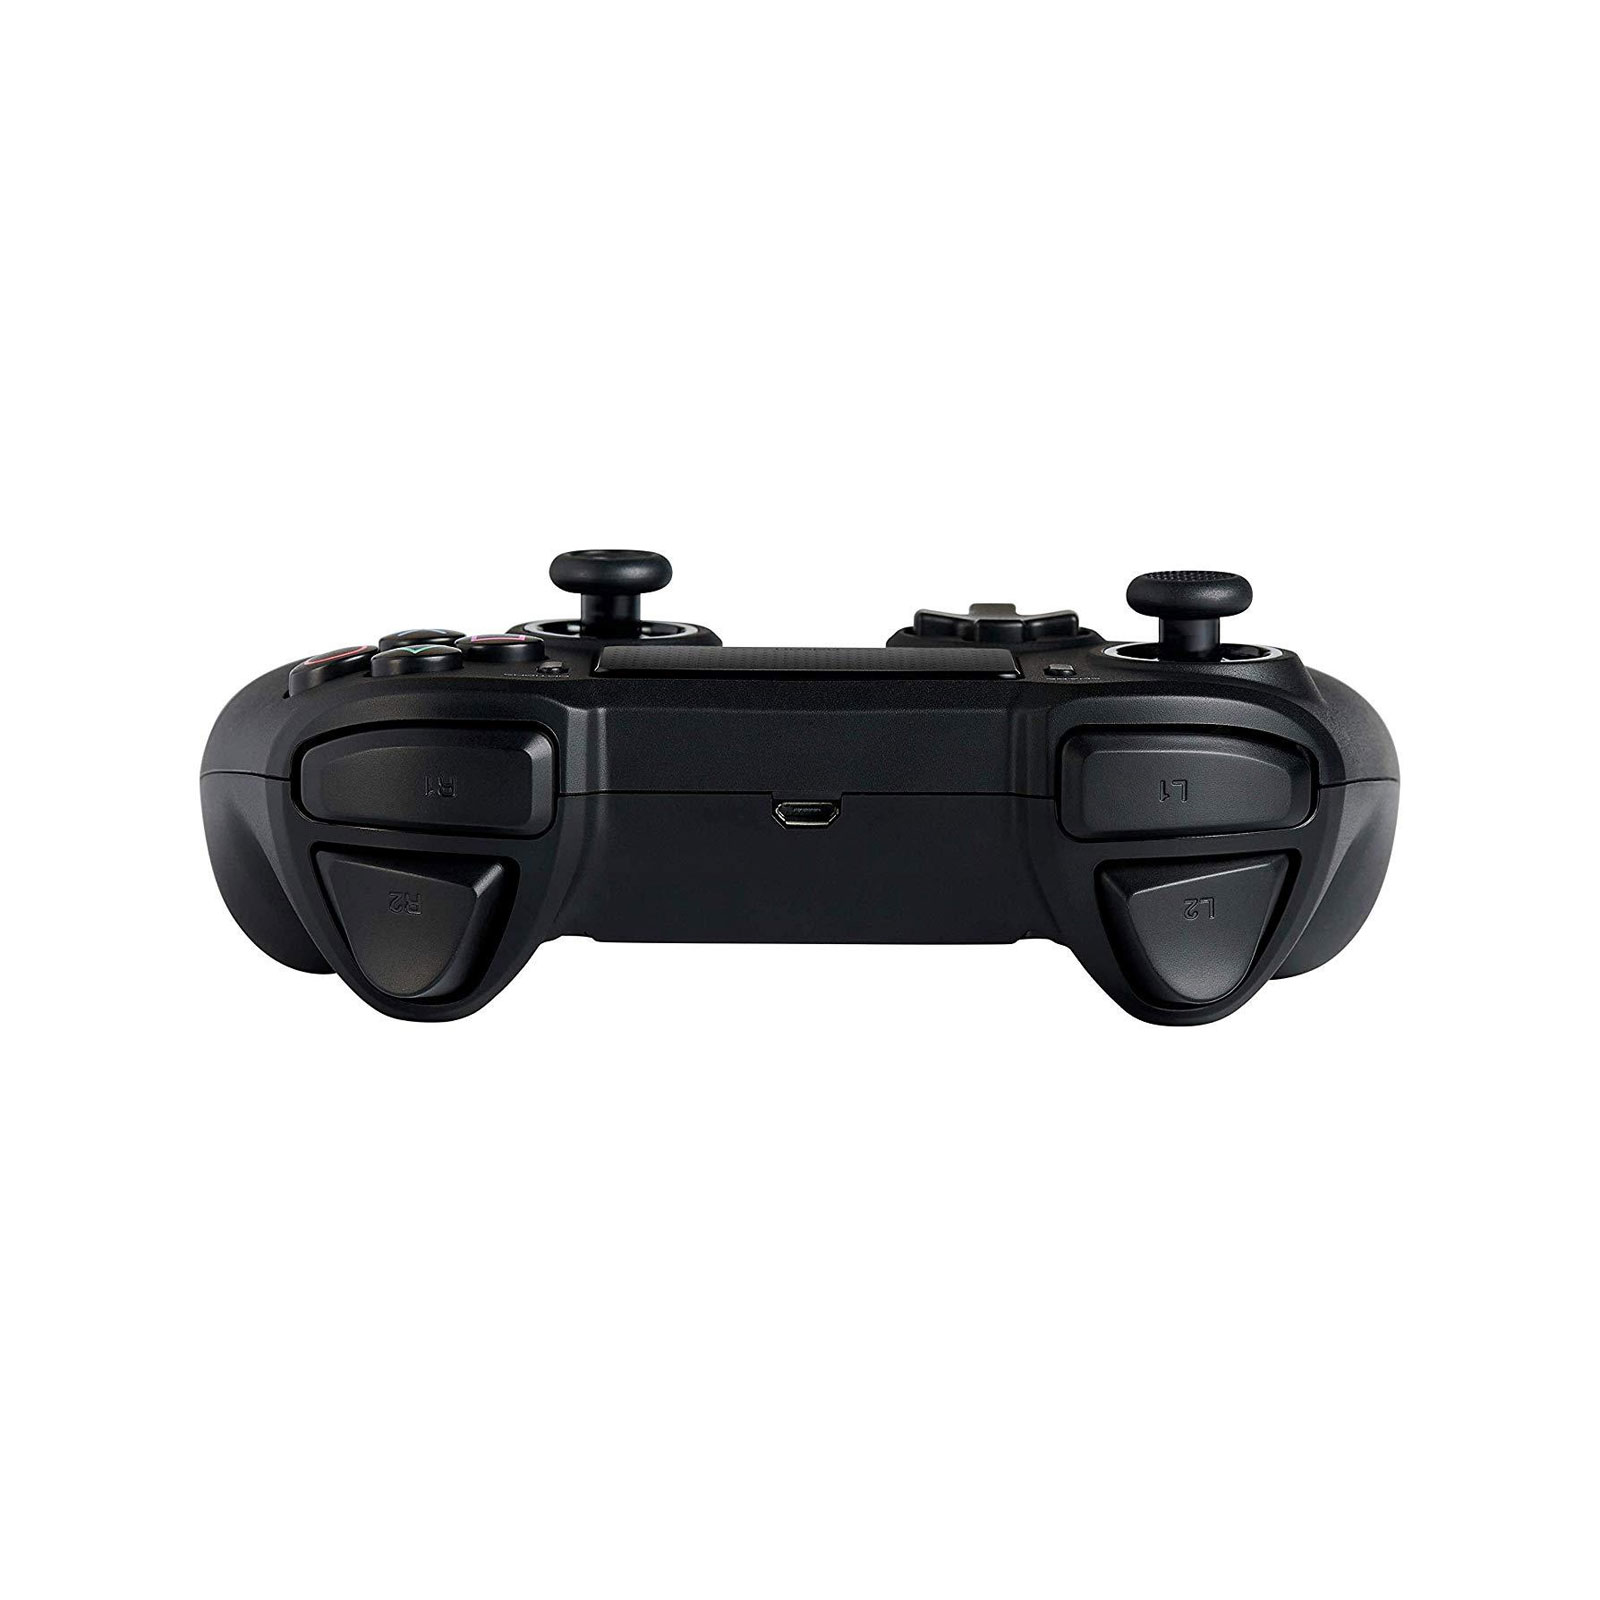 Nacon PS4 Wireless schwarz Playstation Controller